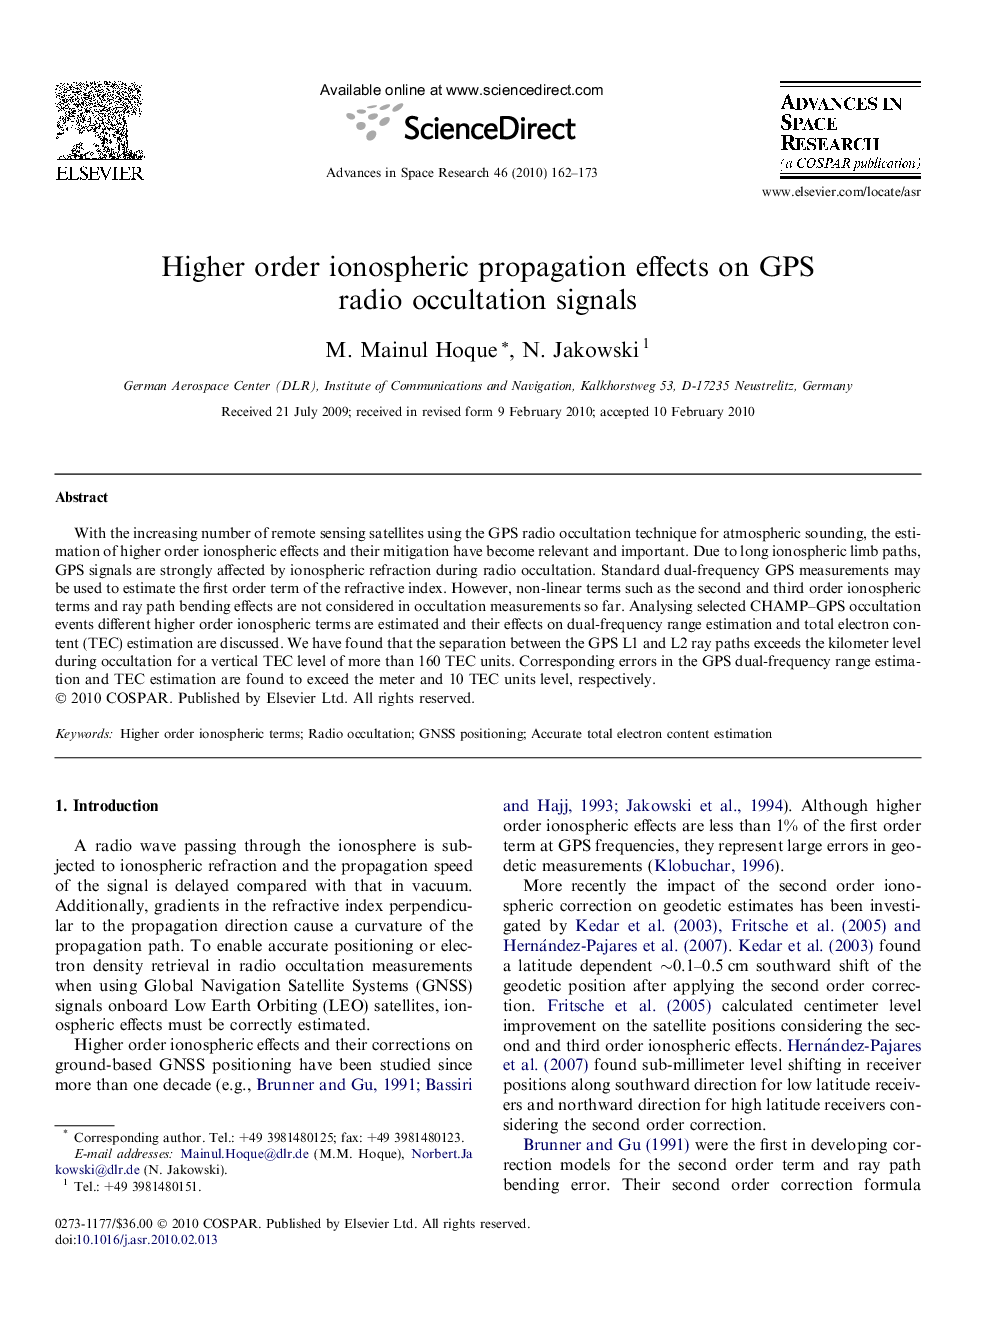 Higher order ionospheric propagation effects on GPS radio occultation signals